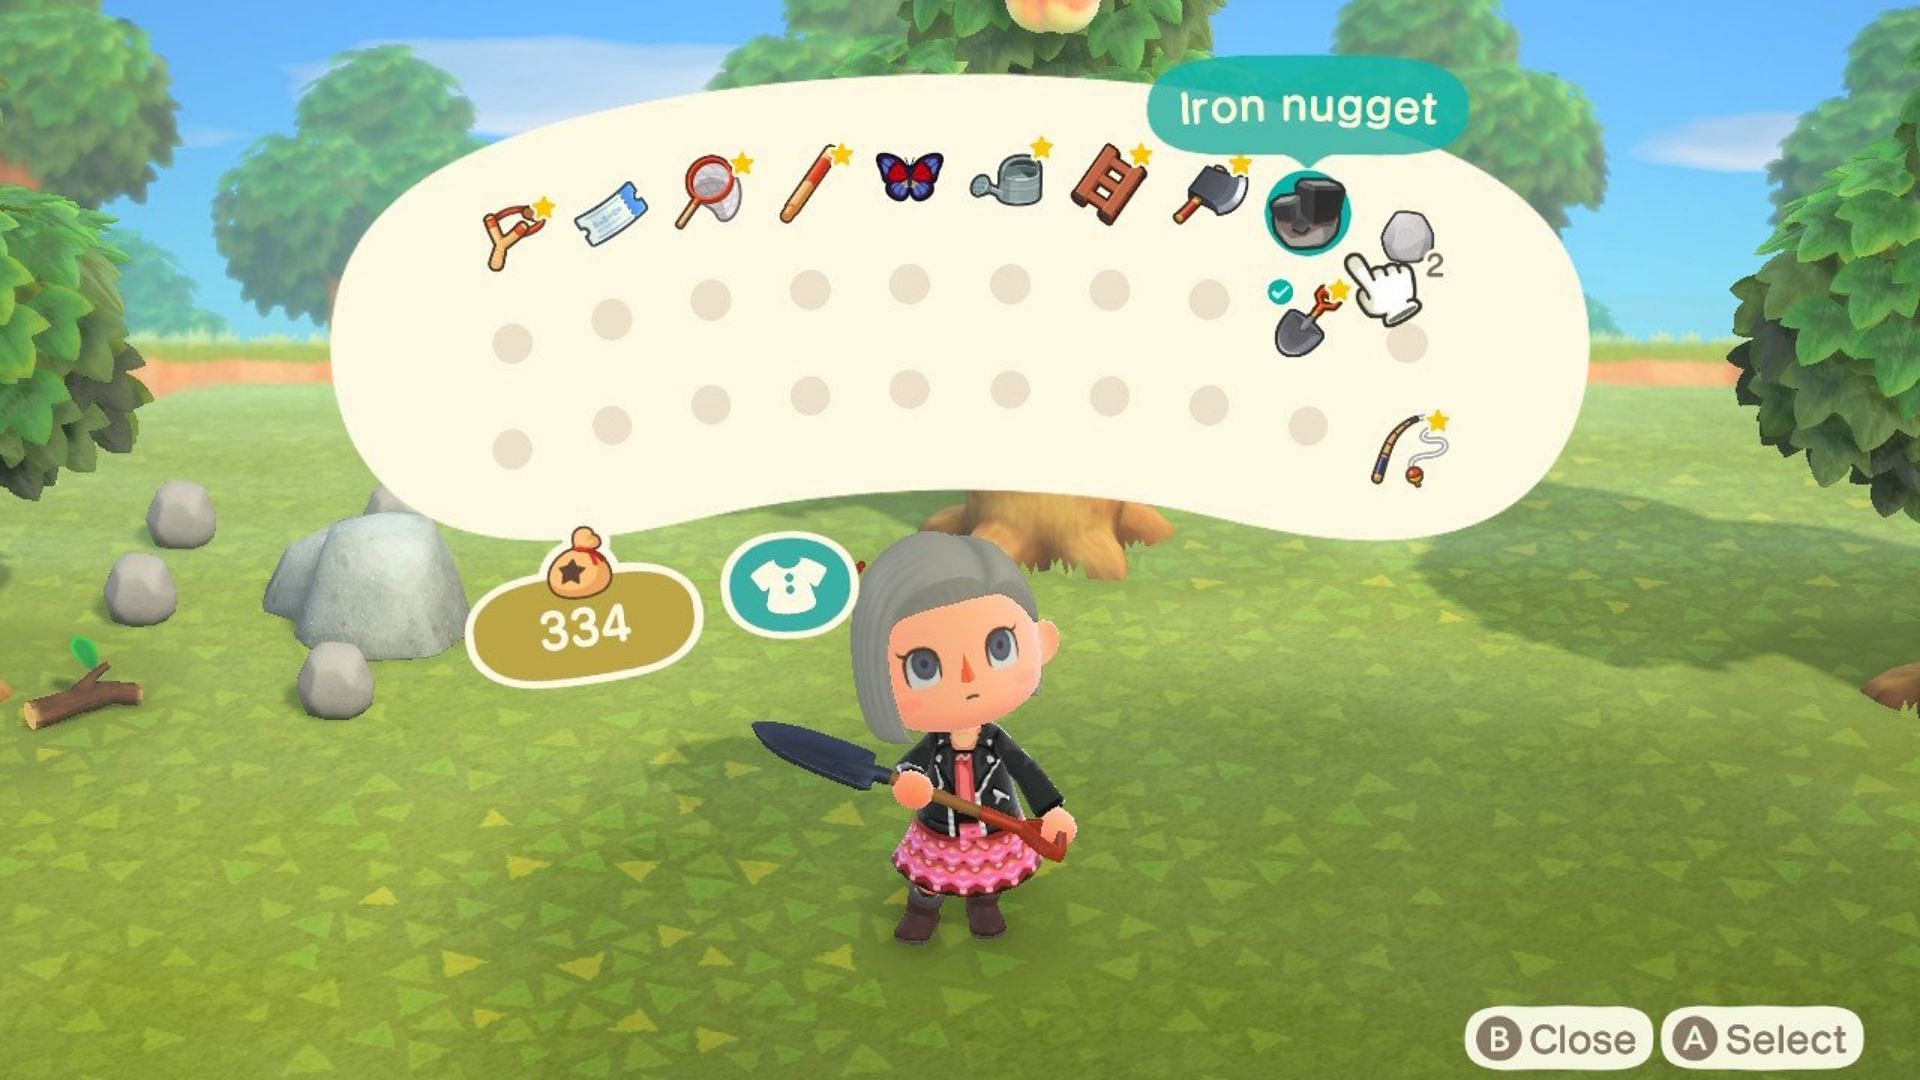 Cara Mendapatkan Banyak Iron Nuggets di Animal Crossing: New Horizons